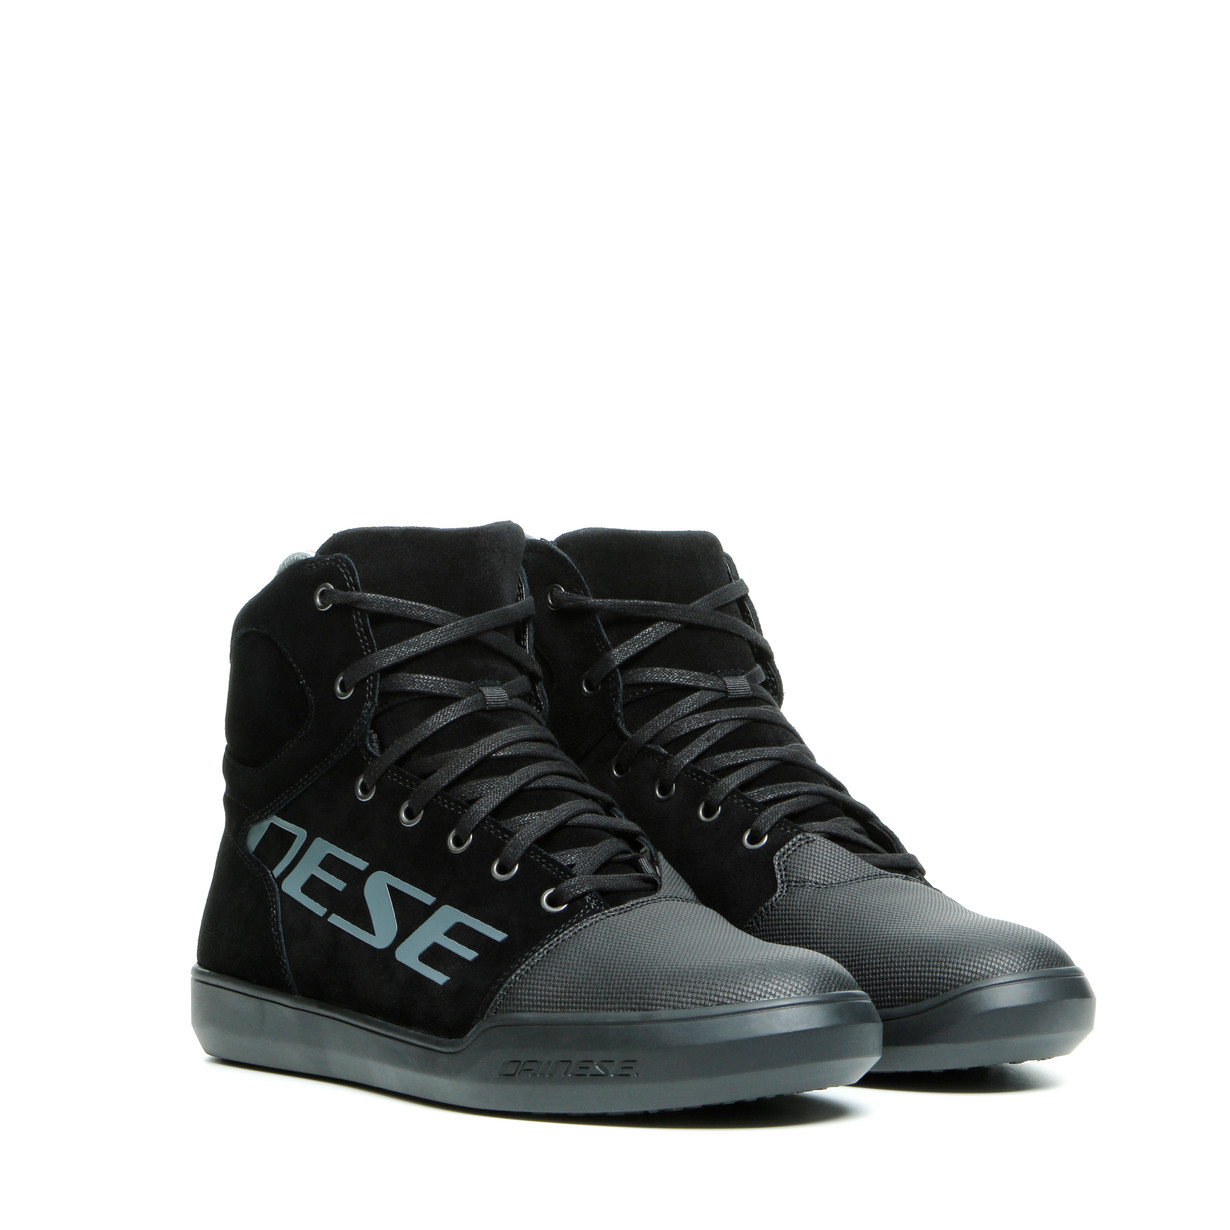 Dainese Atipica Air 2 Shoes Black/Carbon Scarpe Moto Uomo Omologate Nero